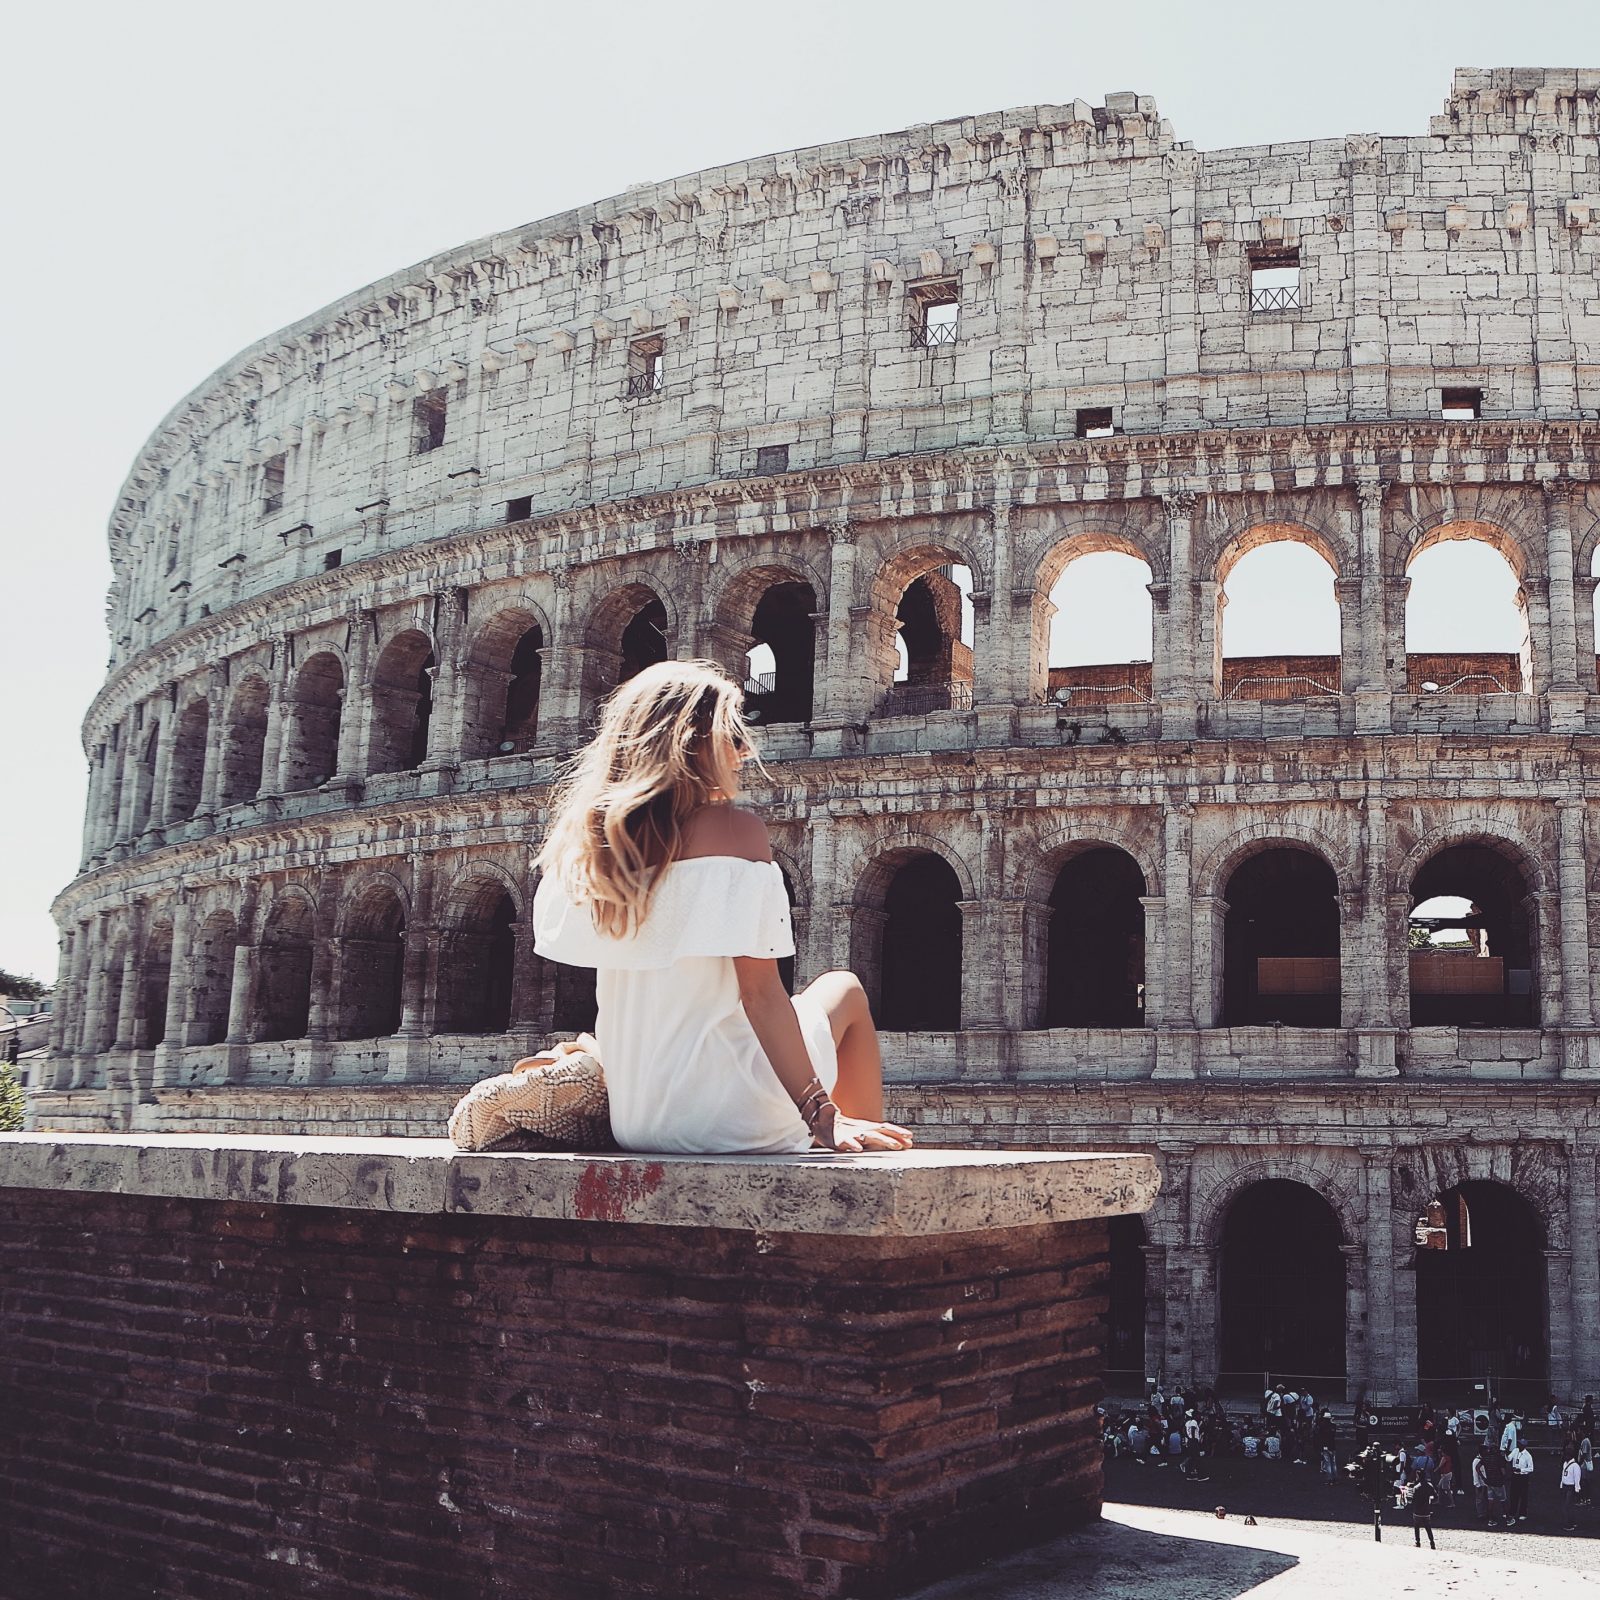 Holiday Lookbook - Rome Colosseum